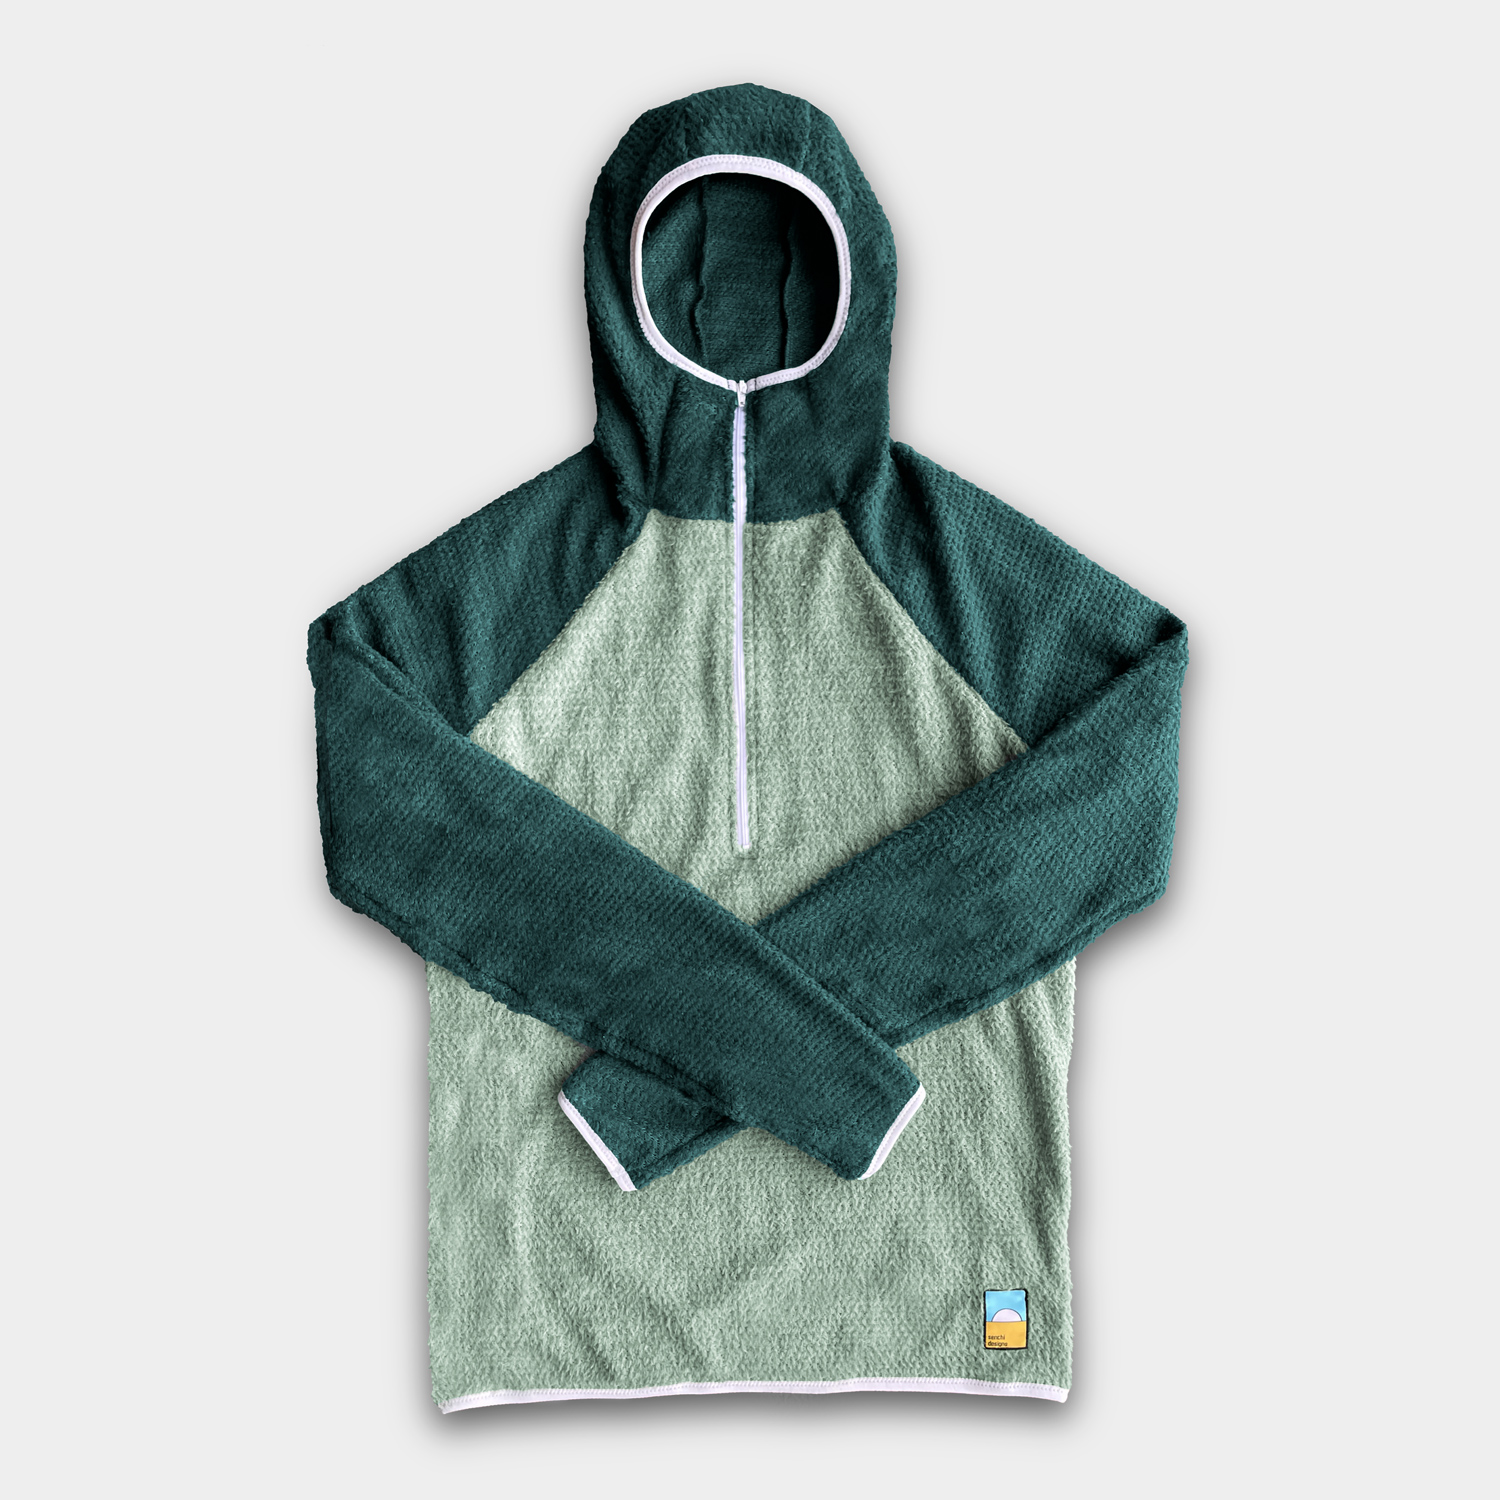 senchi designs hoodie